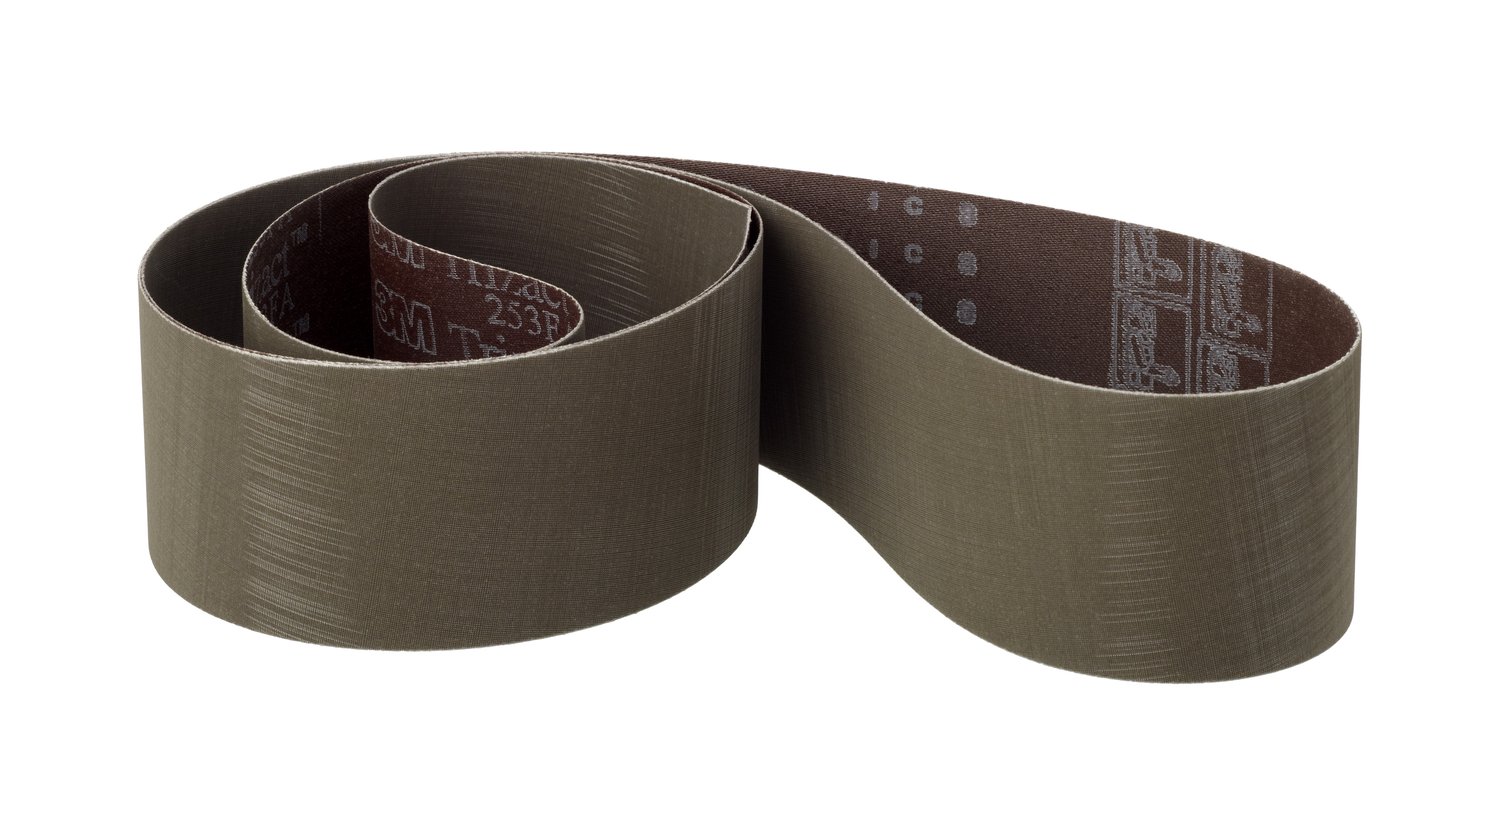 7010515575 - 3M Trizact Cloth Belt 253FA, A6 XF-weight, 6 in x 148 in, Film-lok,
Full-flex